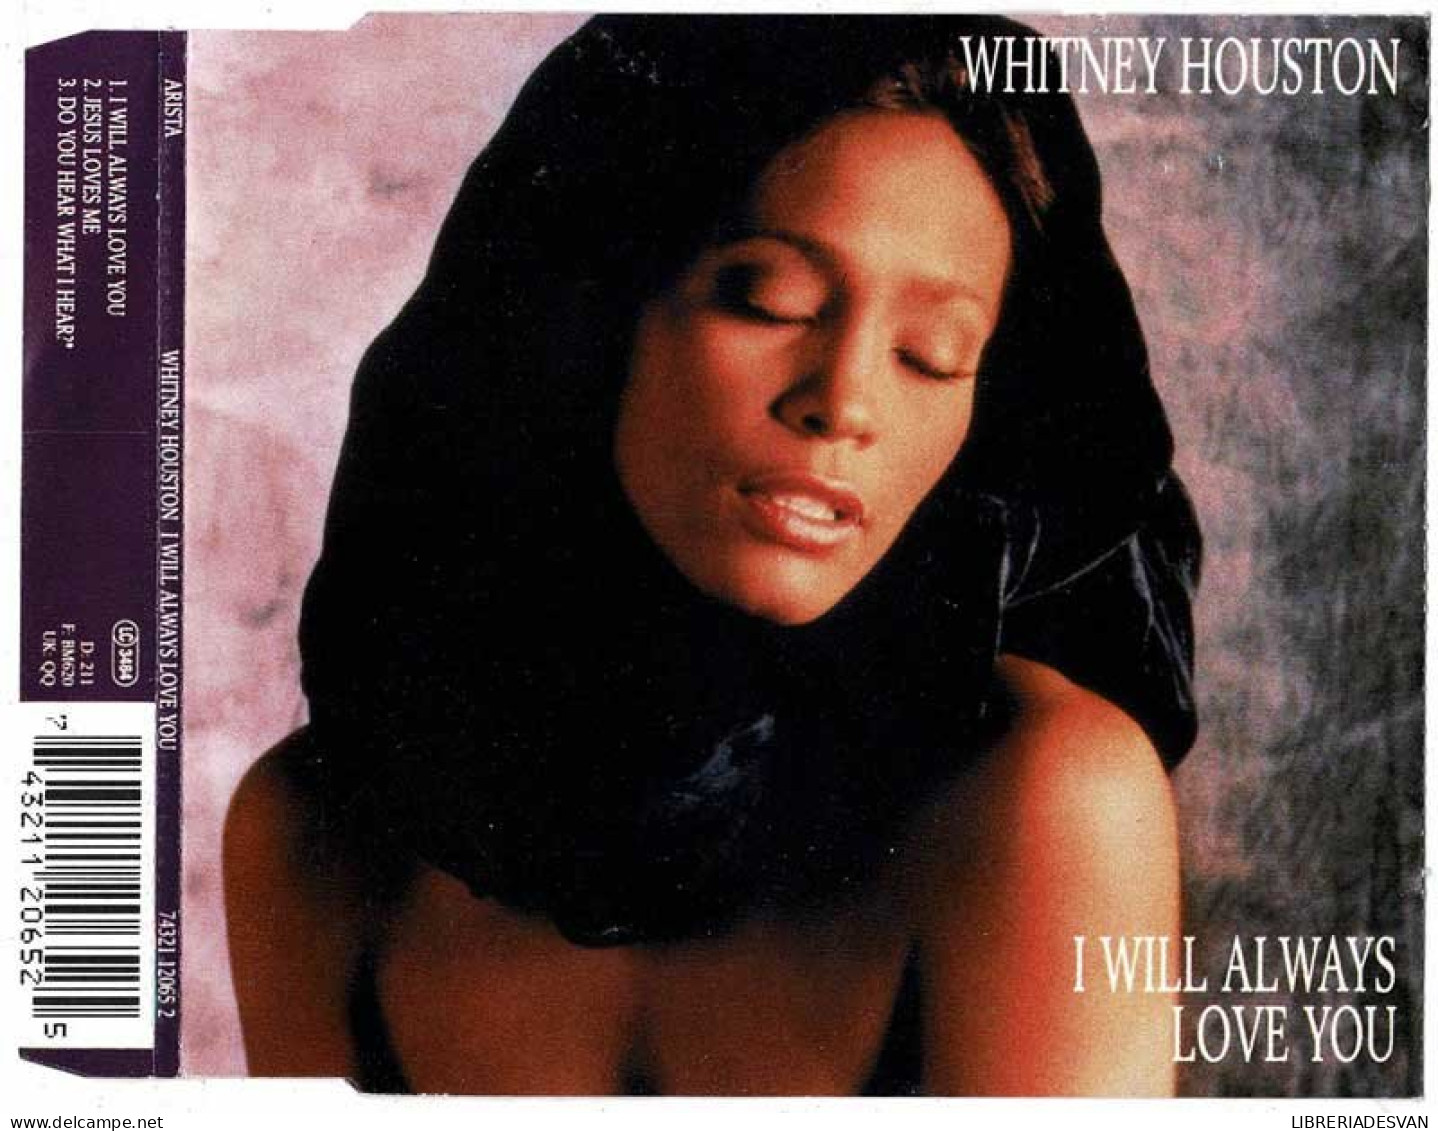 Whitney Houston - I Will Always Love You. CD Single - Disco, Pop